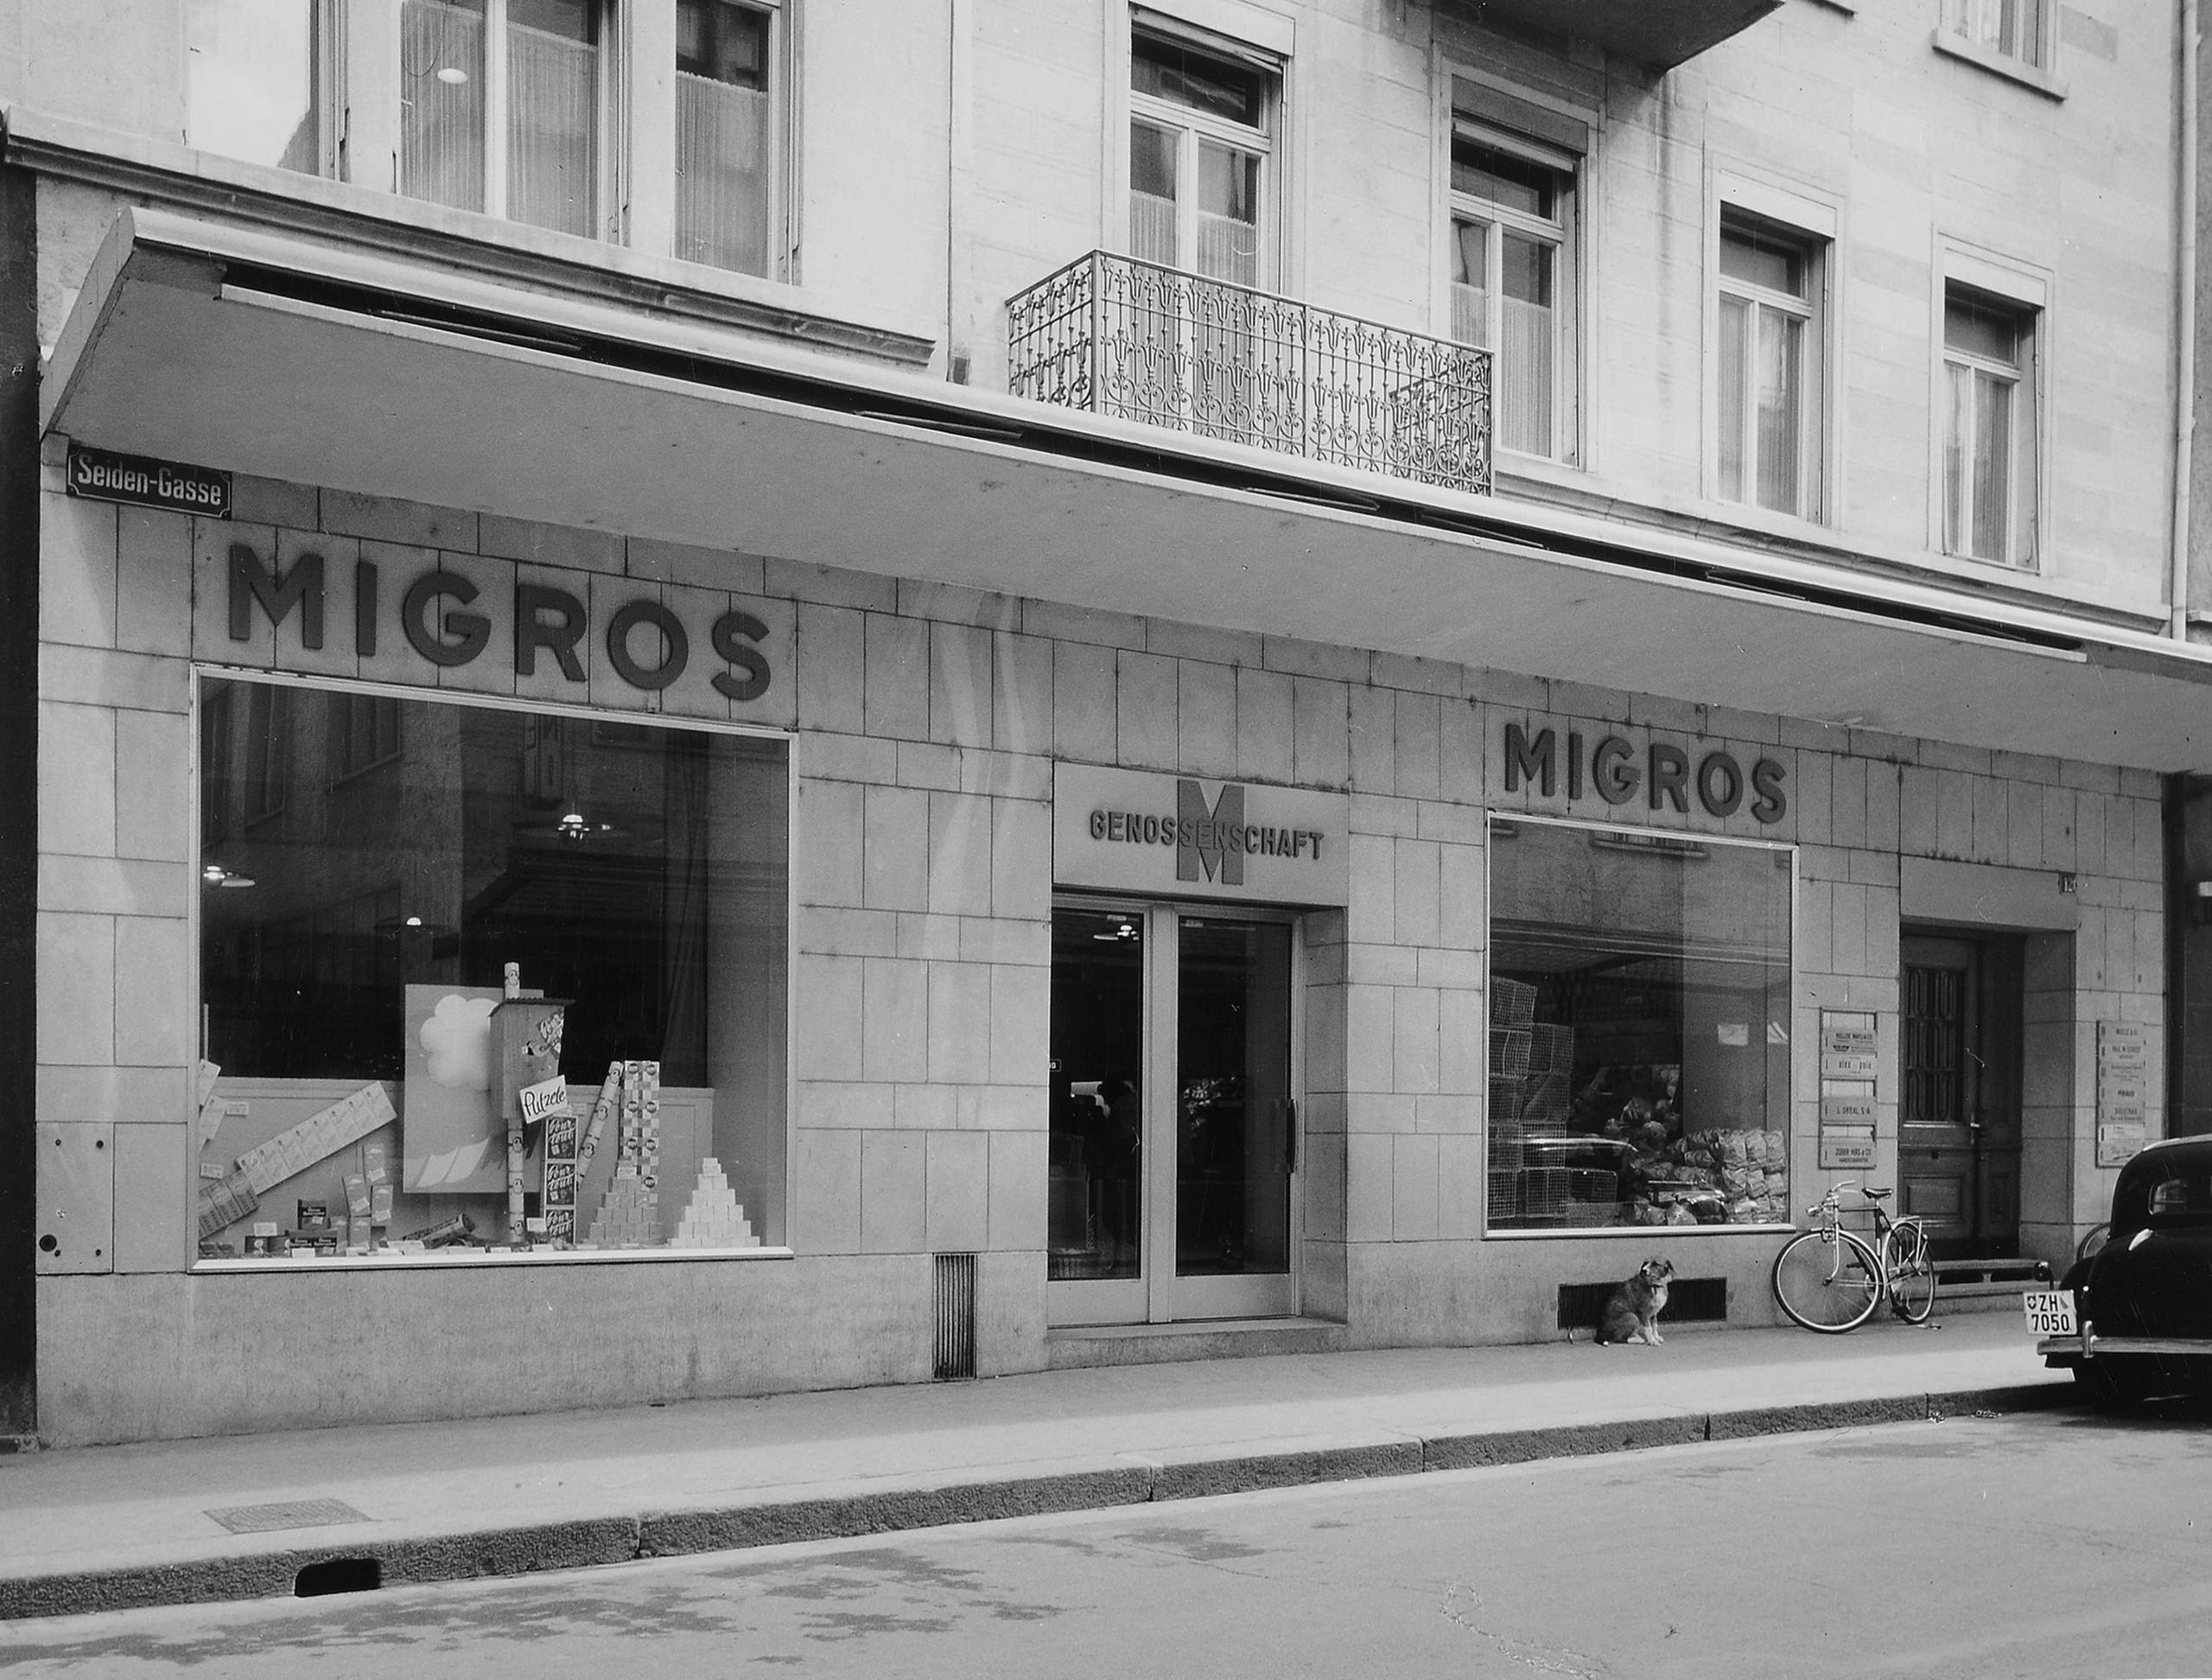 Vista da fachada da primeira loja Migros self-service.